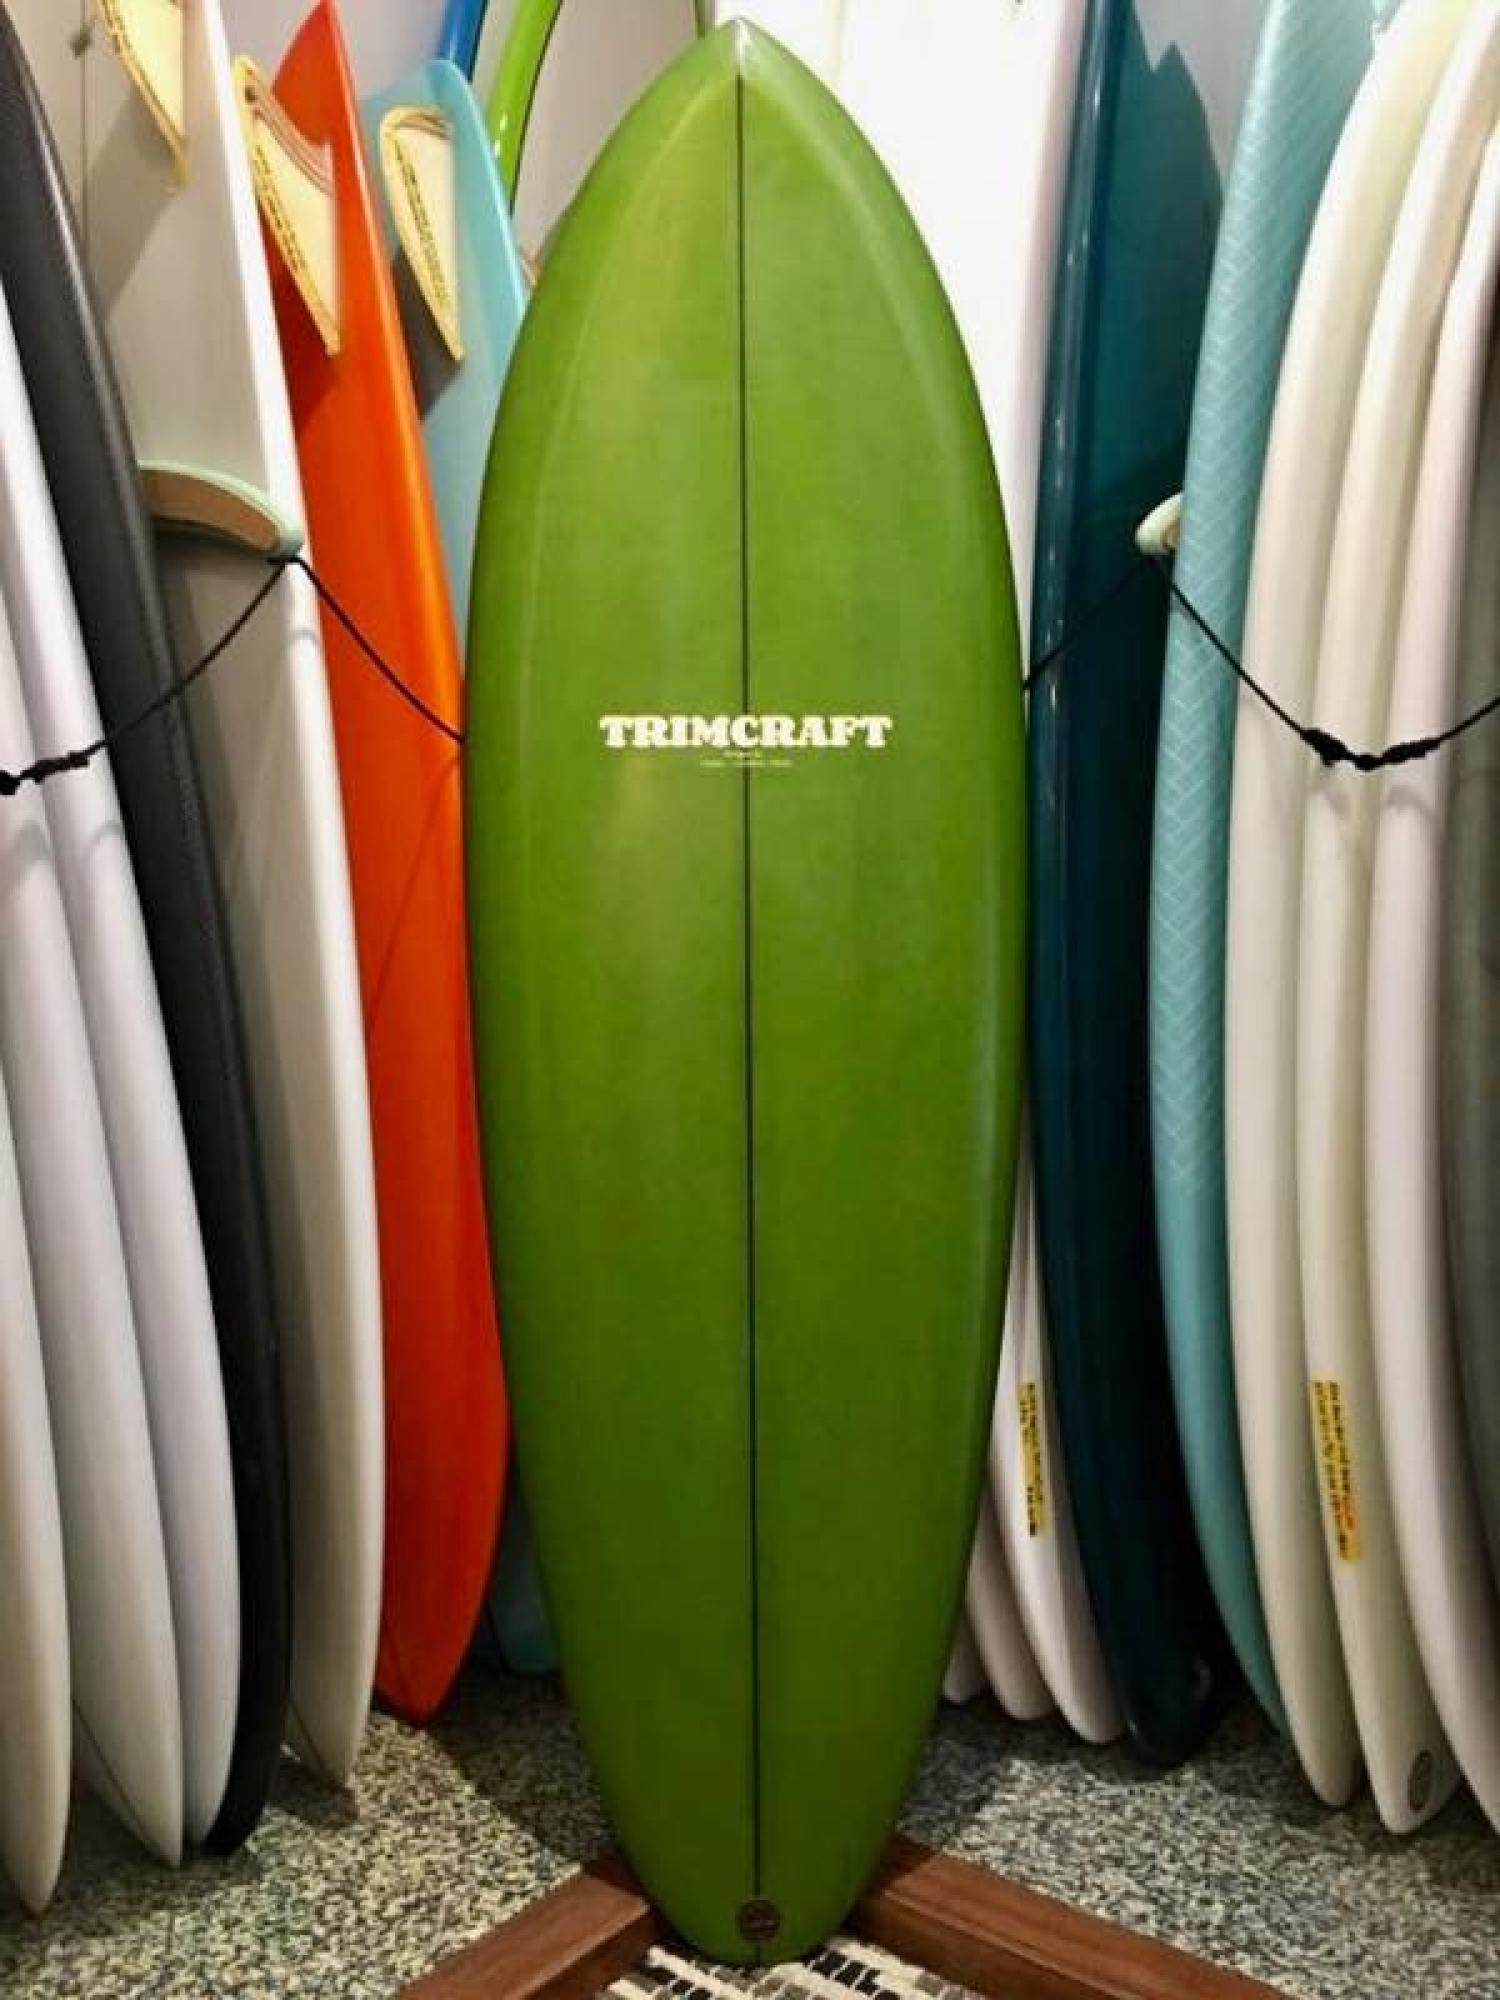 TrimCraft Surfboards t.Rev 5.6